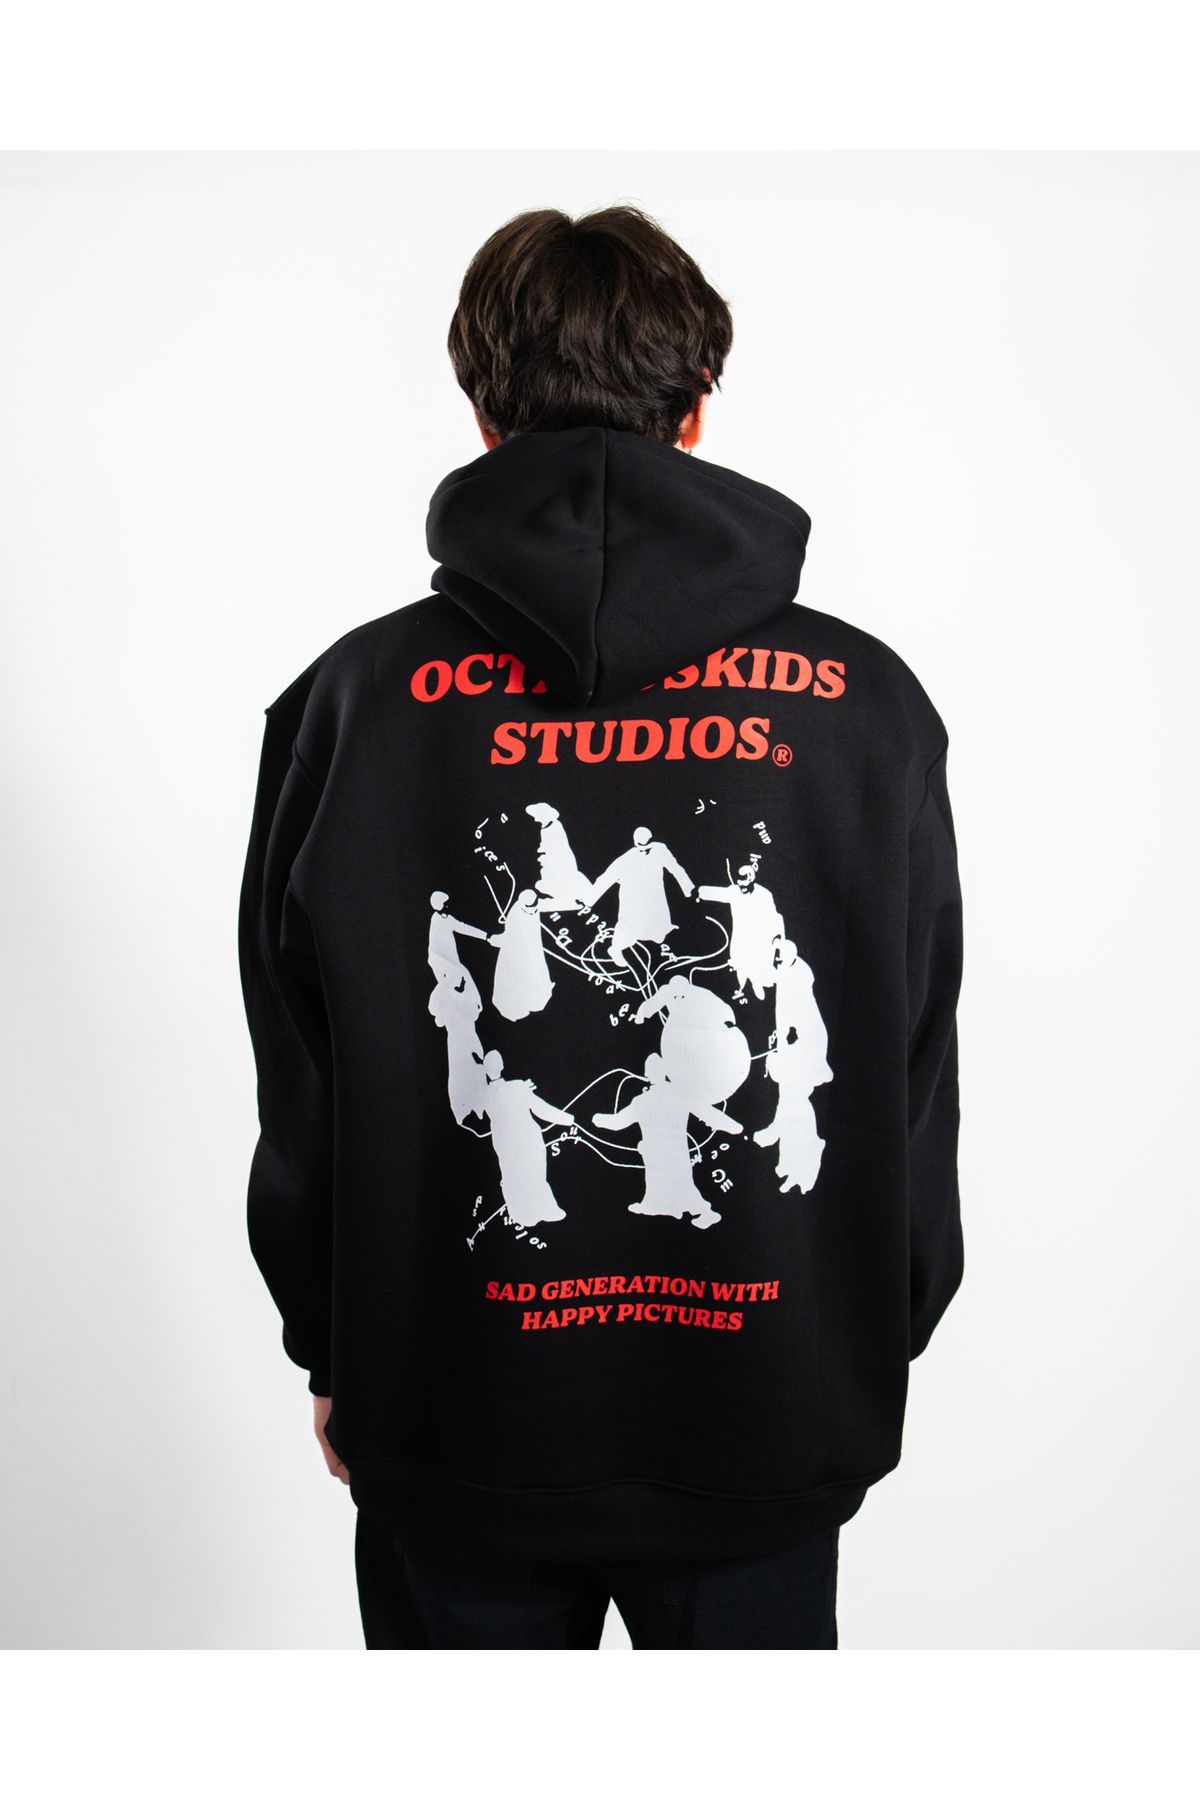 Octavos OctavosKids Studios Baskılı Oversize Sweatshirt